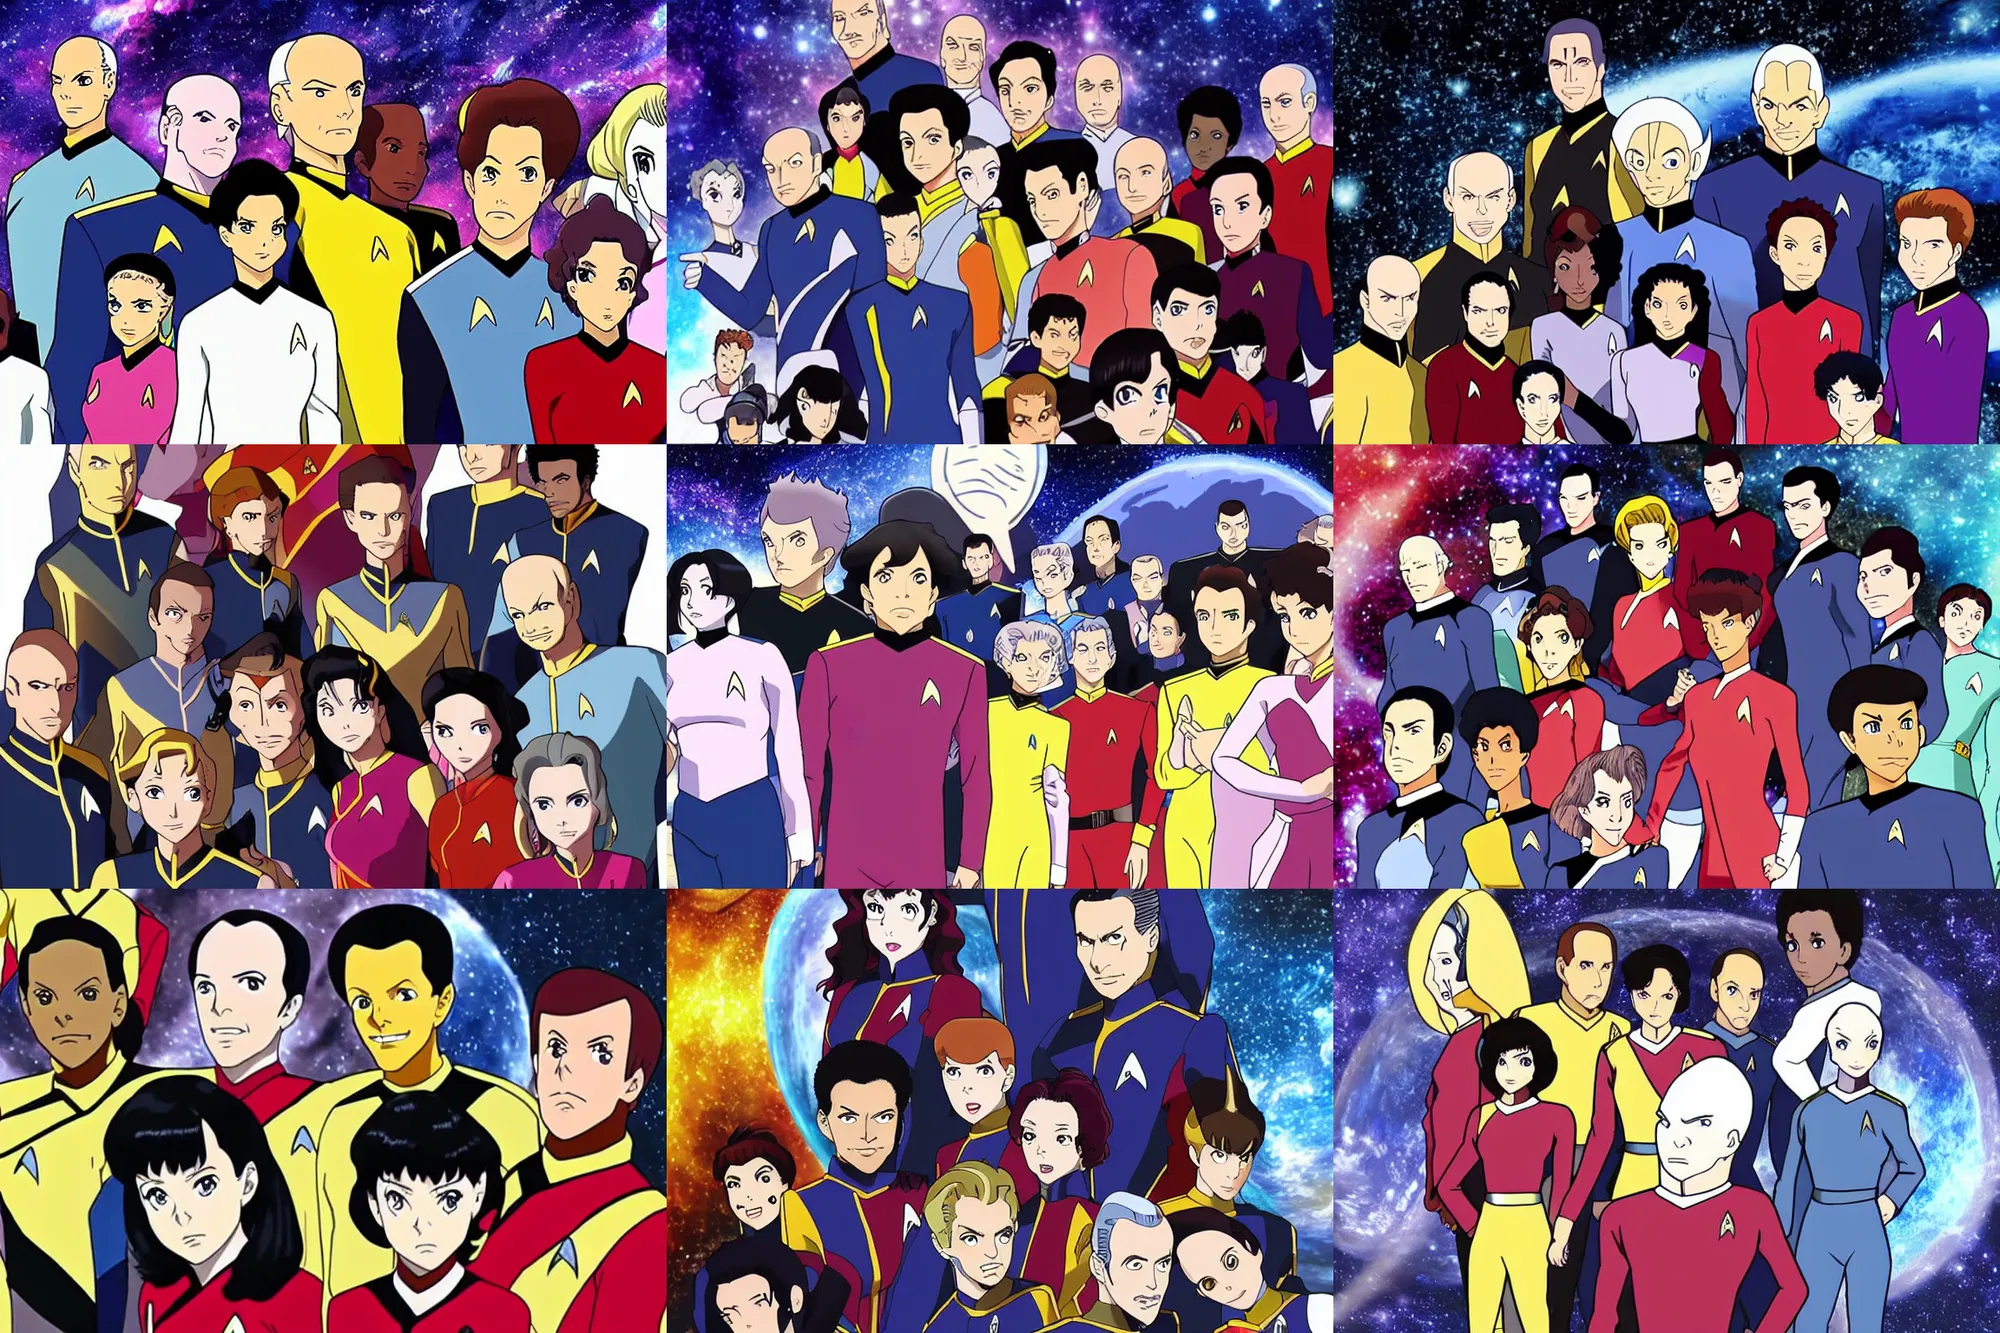 Prompt: Star Trek: Deep Space Nine as an anime